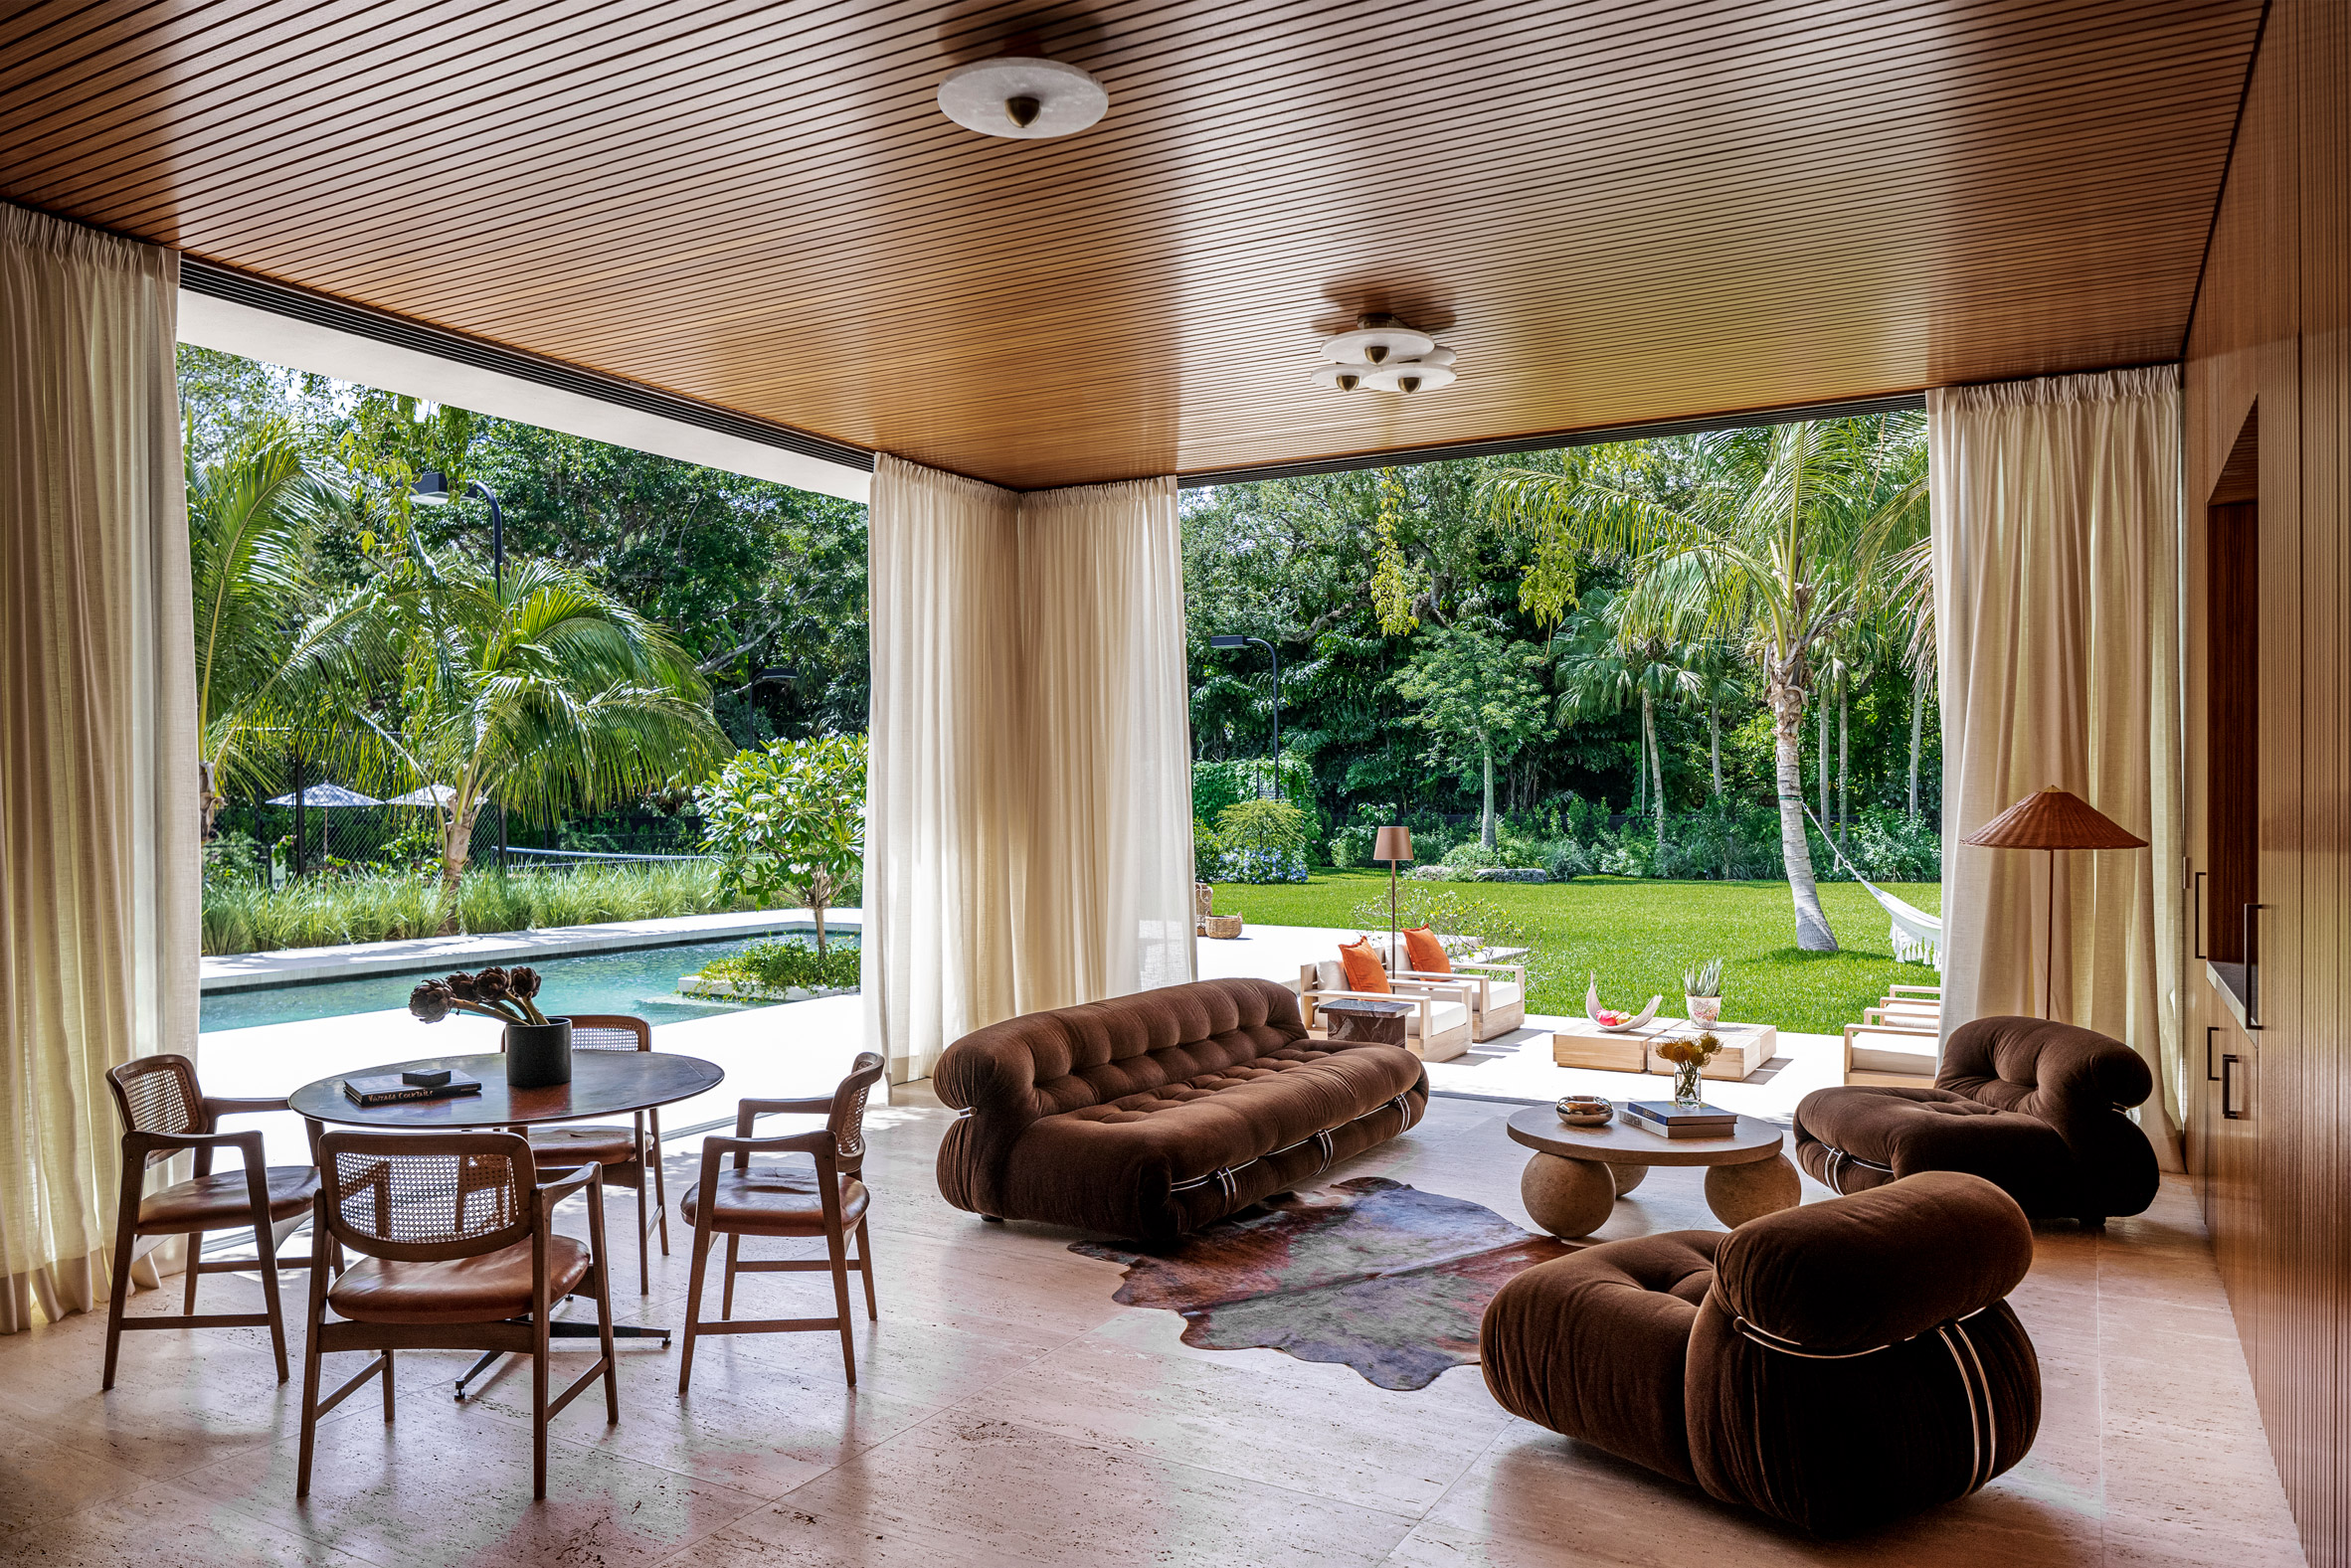 Interior of Miami home by Strang Design with retractable walls